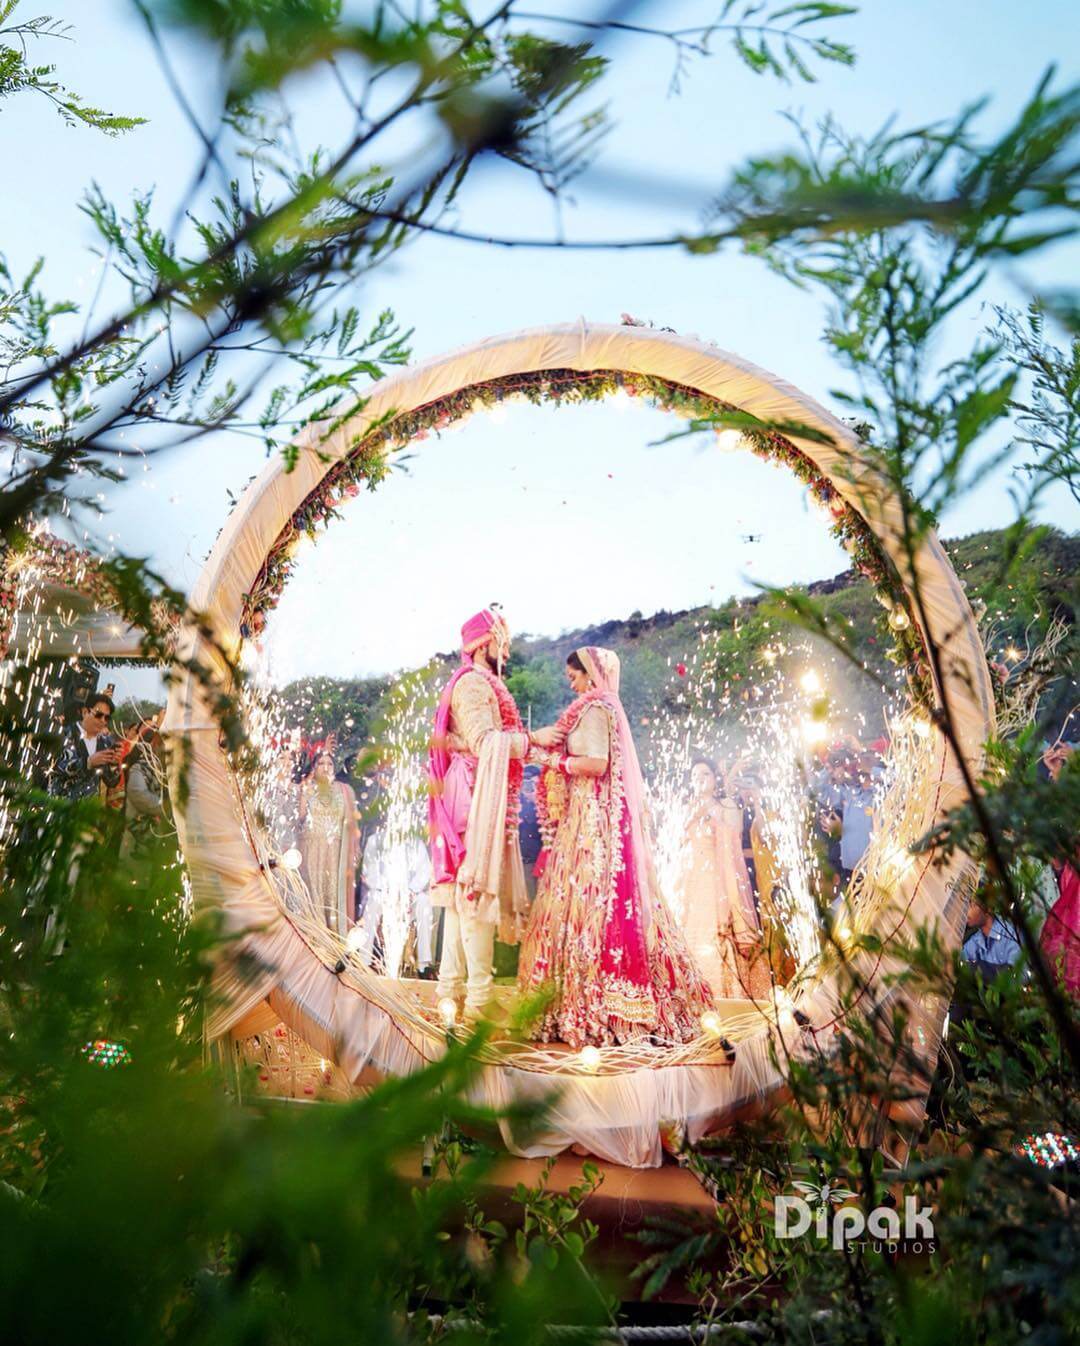 Best Varmala Theme Ideas for Your Wedding: Make Your Varmala Ceremony Memorable